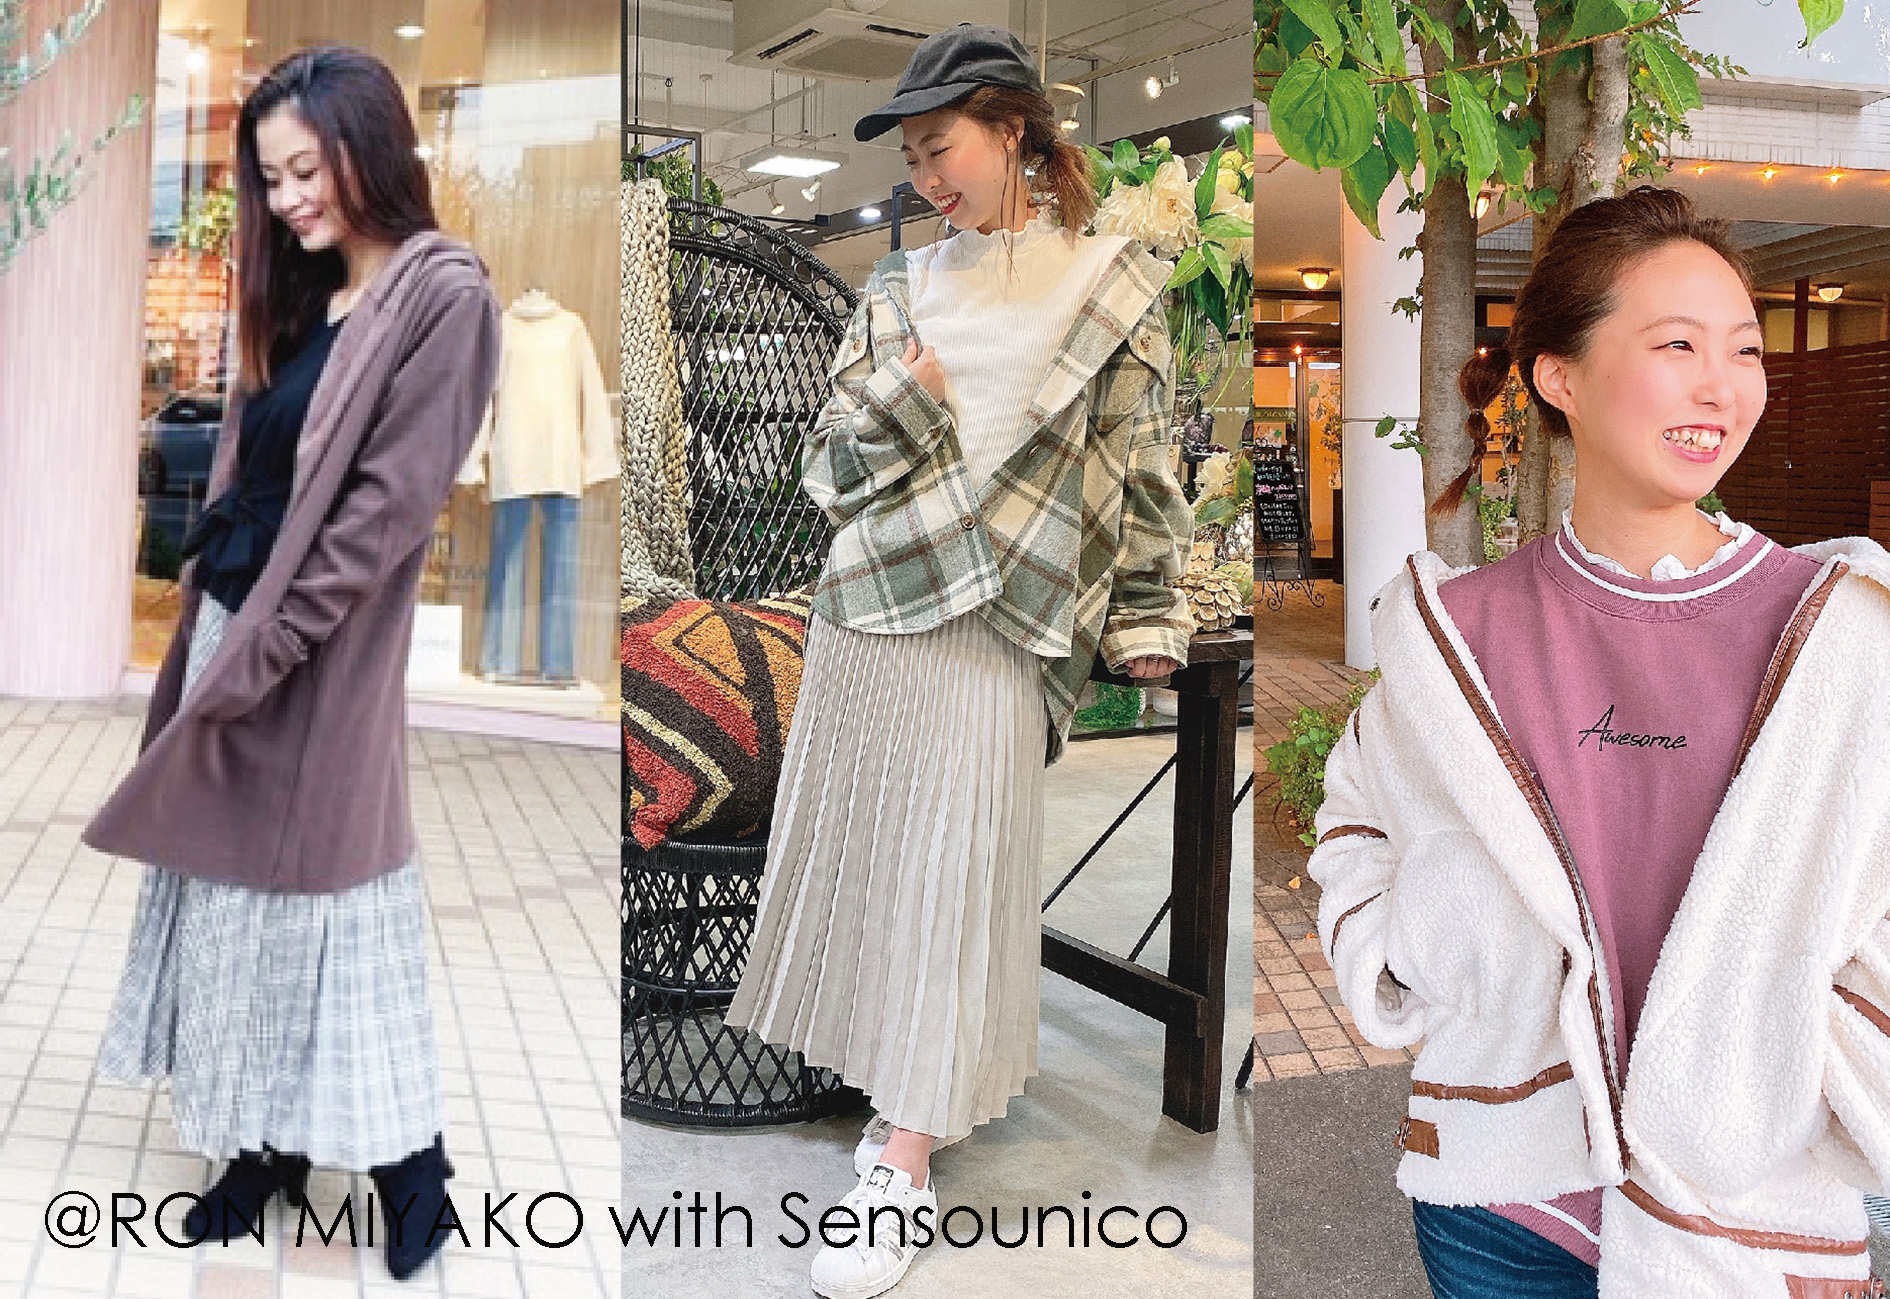 Shop News】11/29(Fri) ロン・都 with Sensounicoが初OPEN!! – Sensounico